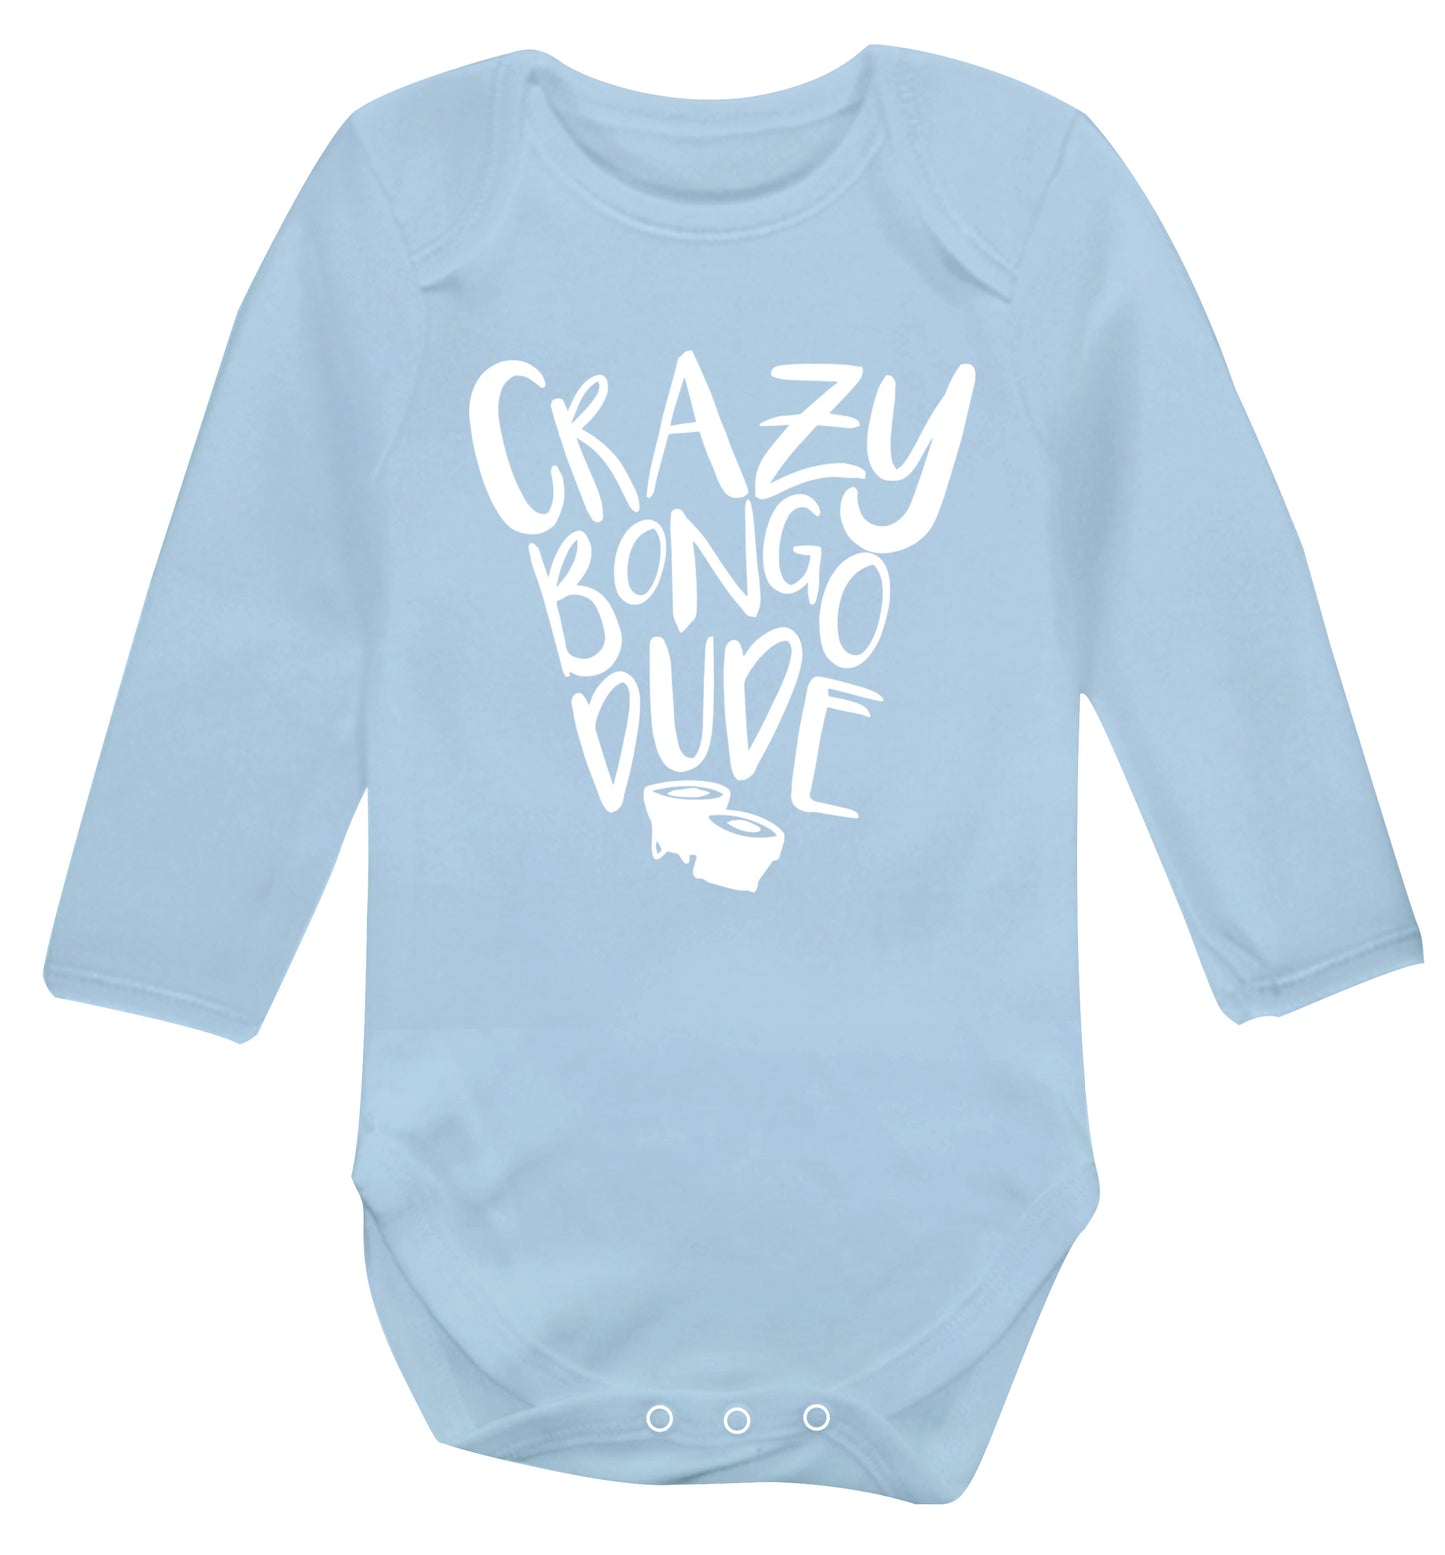 Crazy bongo dude Baby Vest long sleeved pale blue 6-12 months